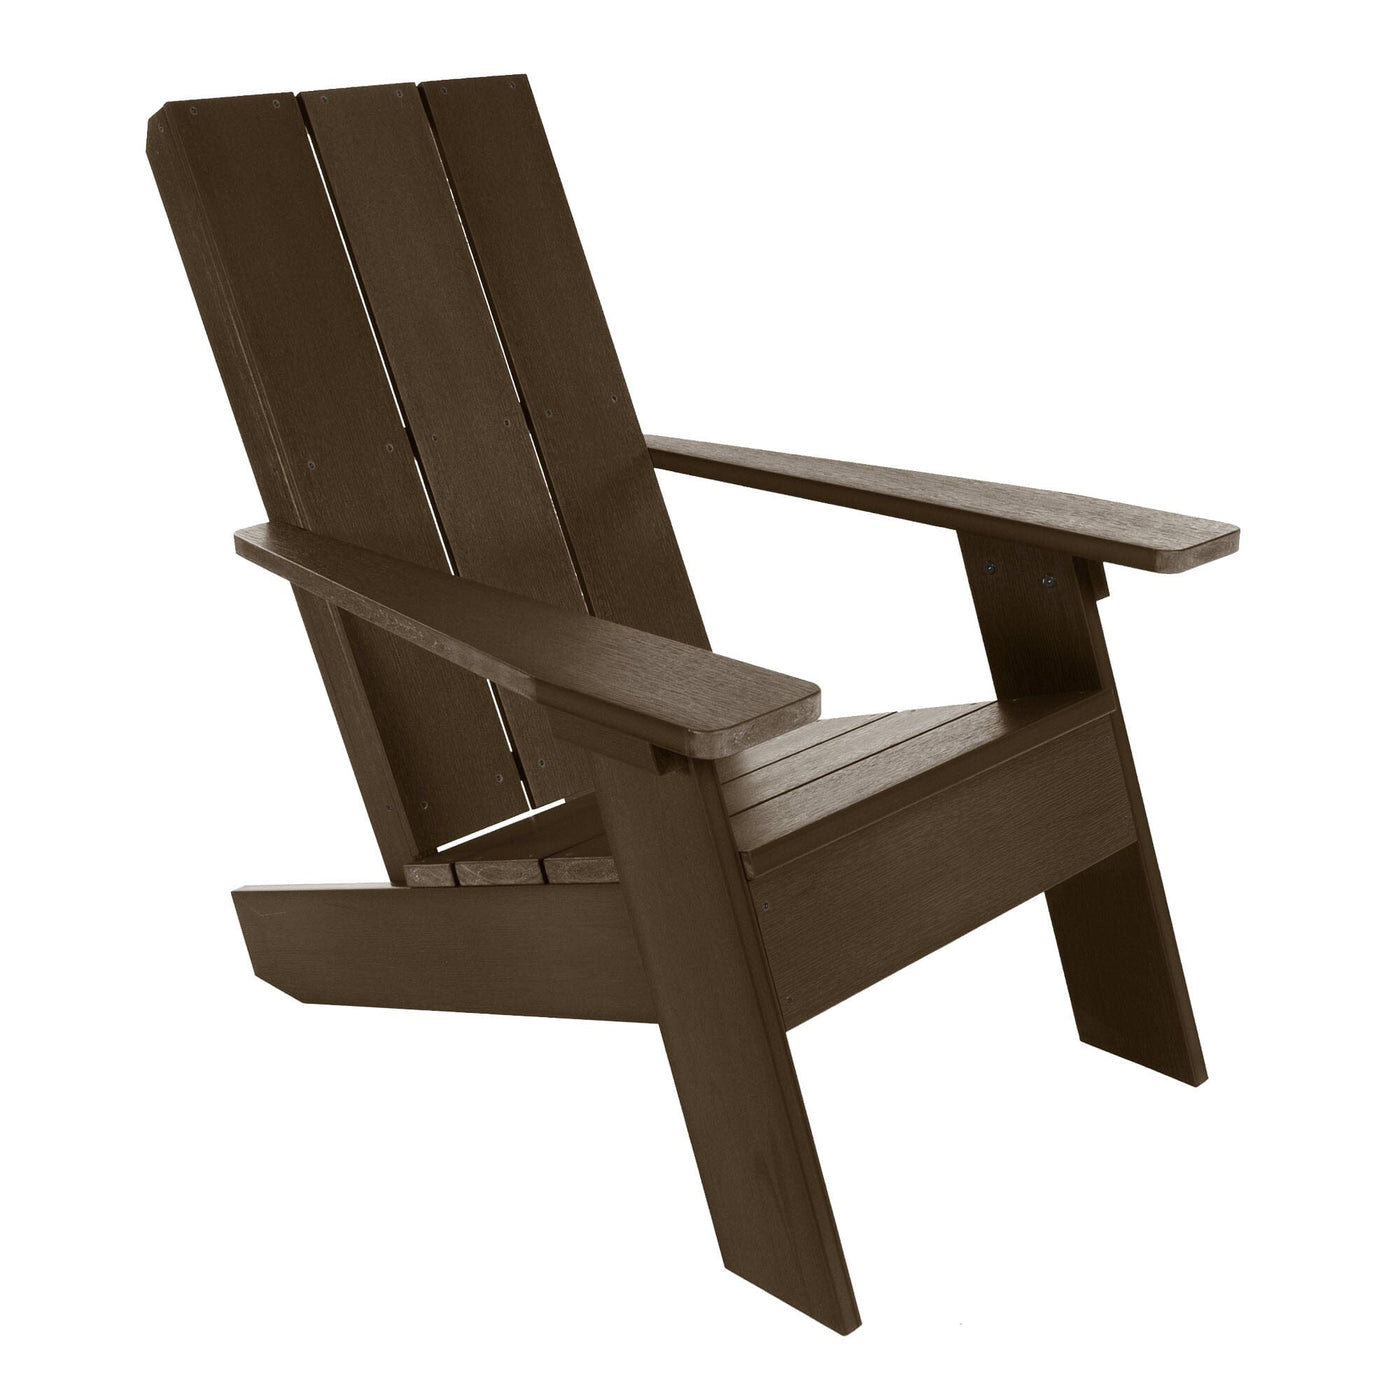 Italica Modern Adirondack Chair in Weathered Acorn